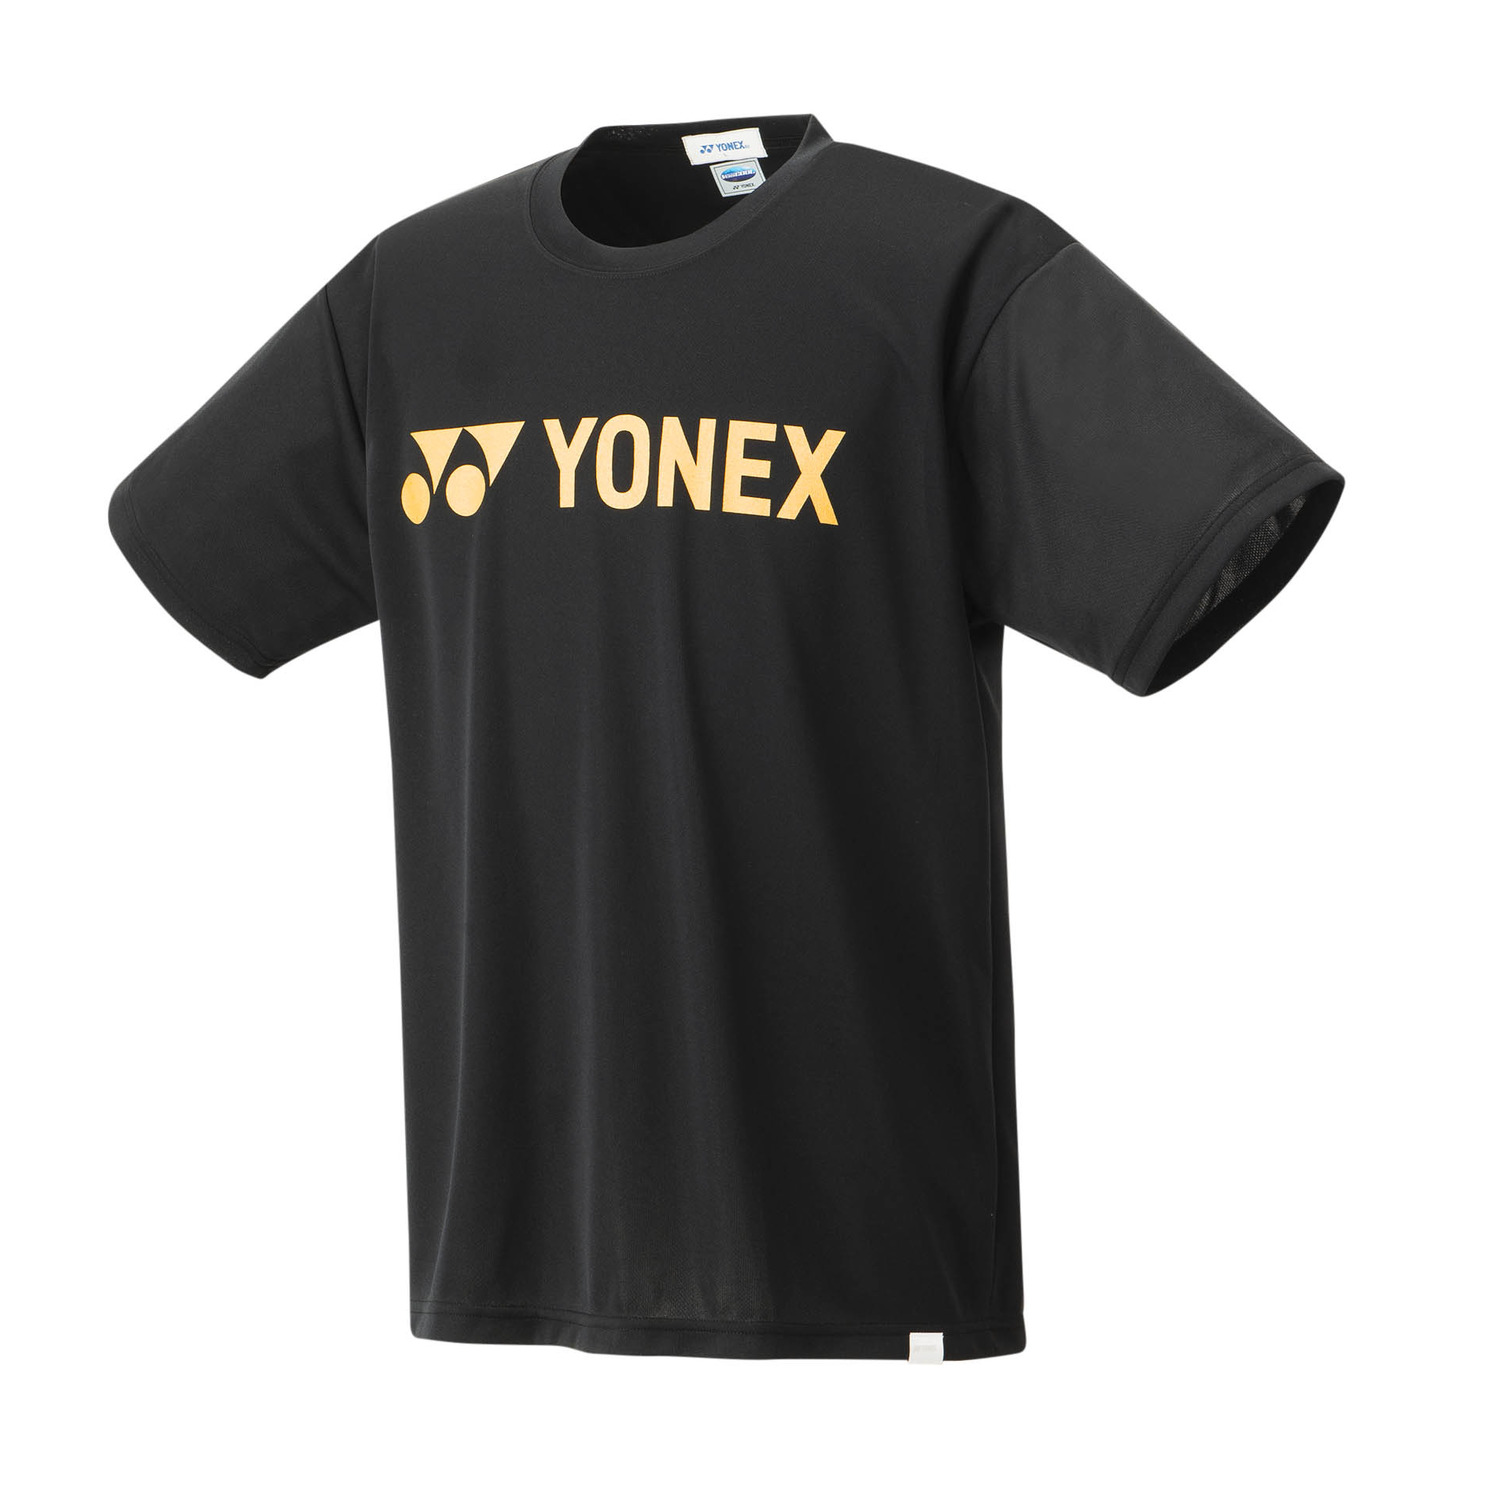 YOB23178  ヨネックス  Tシャツ  ユニO  ブラック